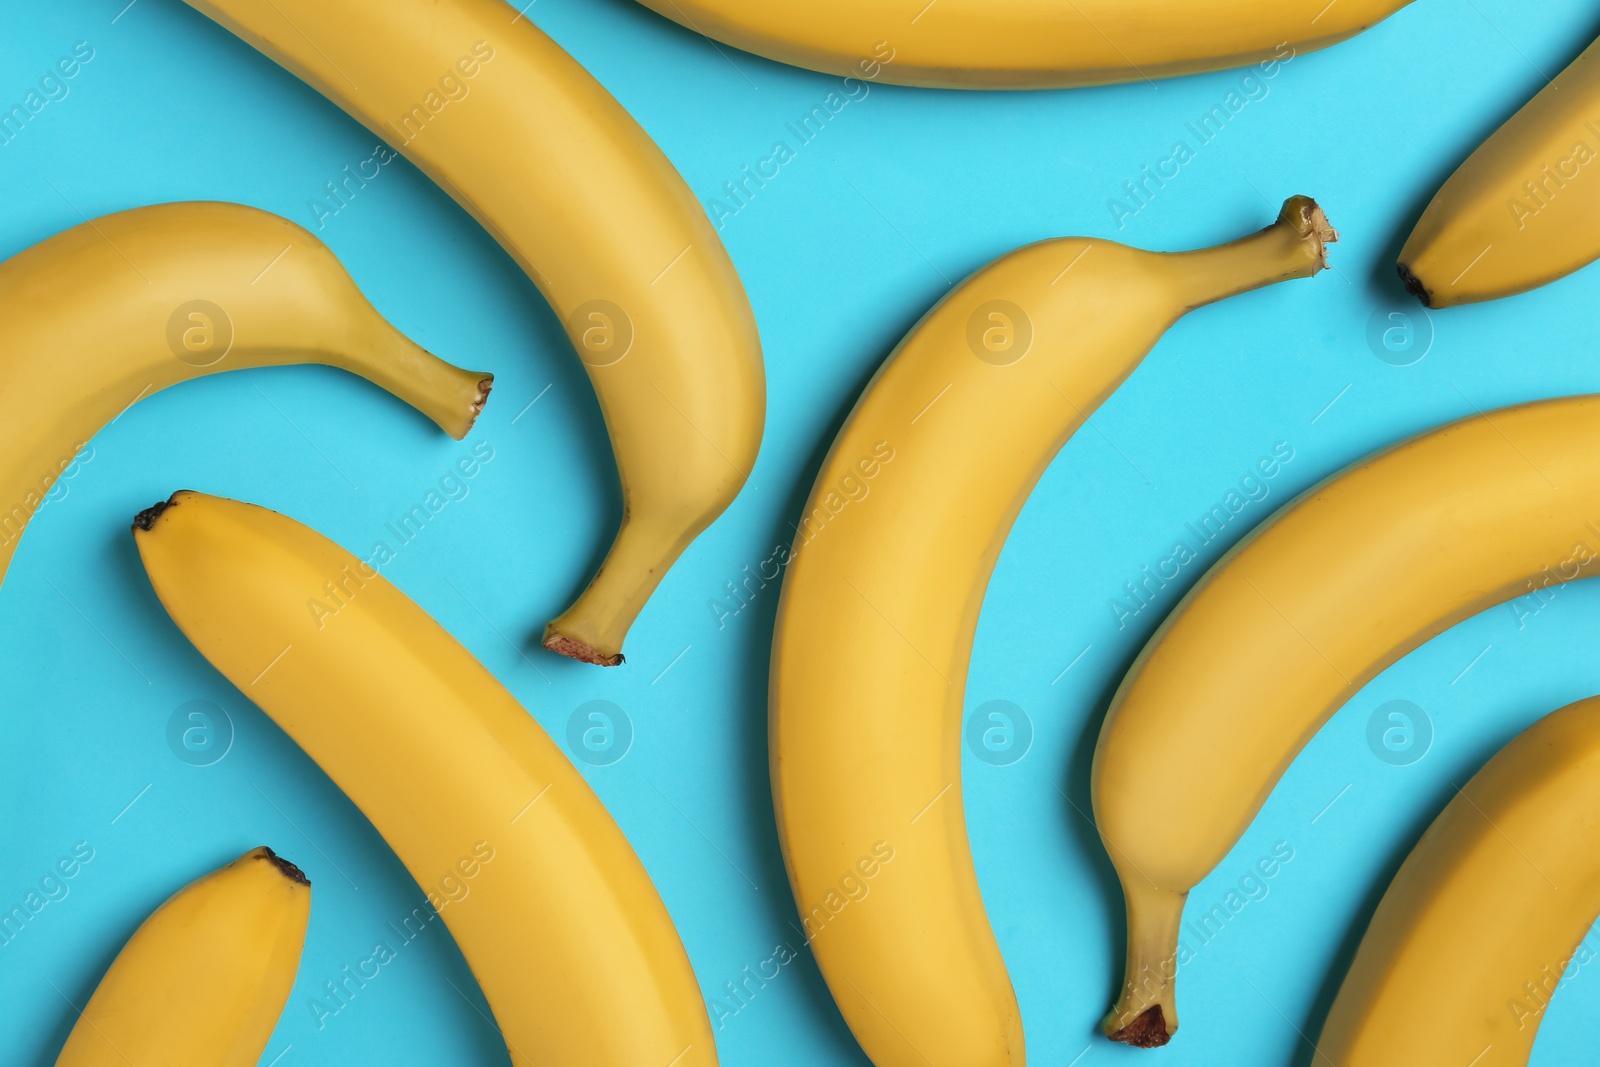 Photo of Ripe yellow bananas on turquoise background, flat lay